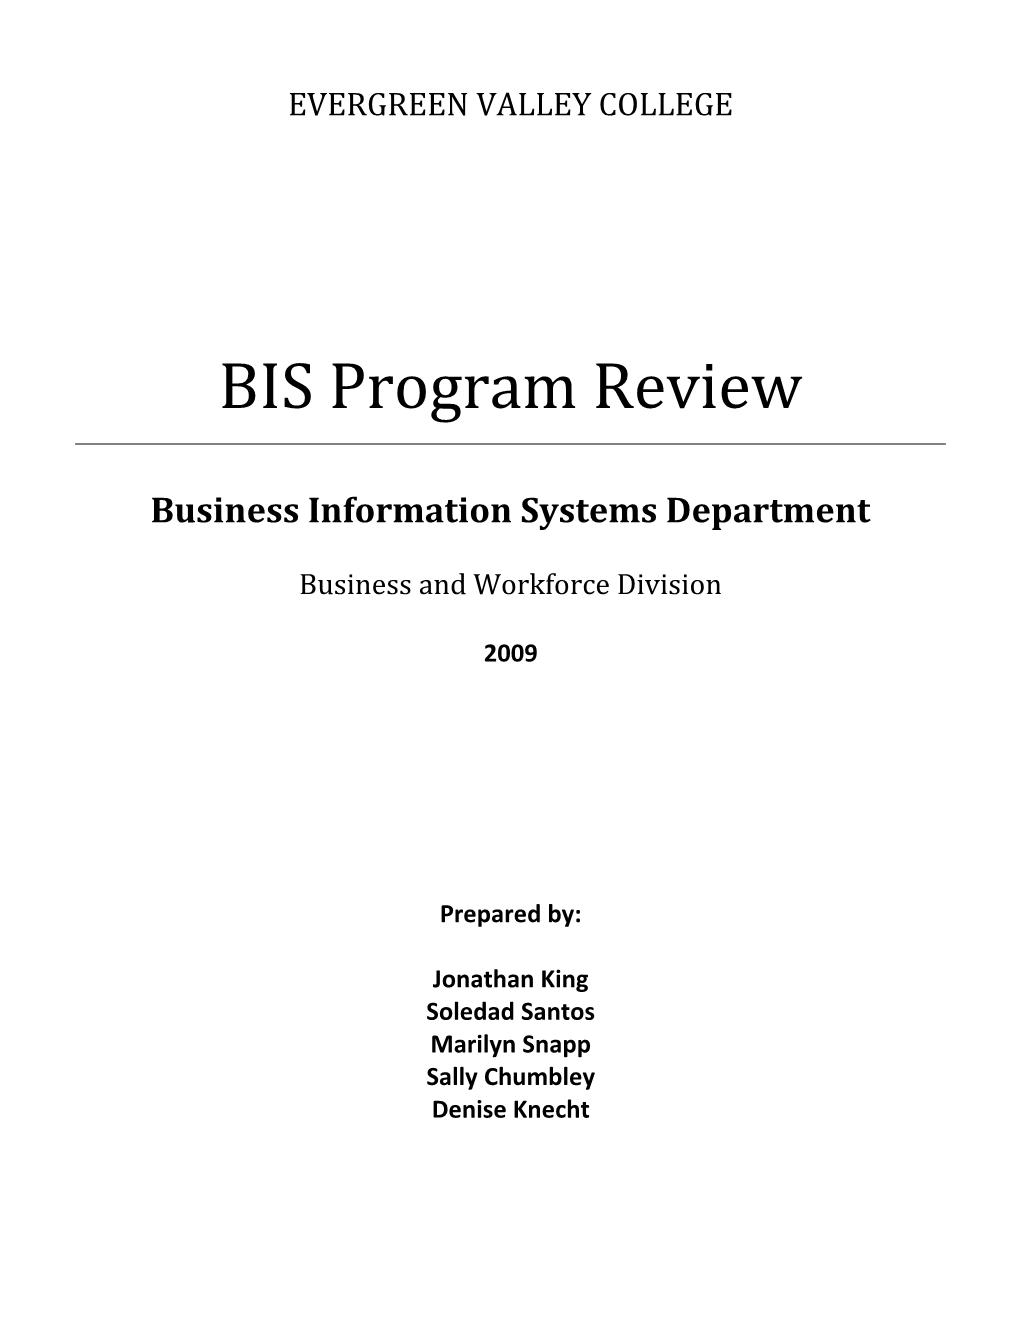 BIS Program Review